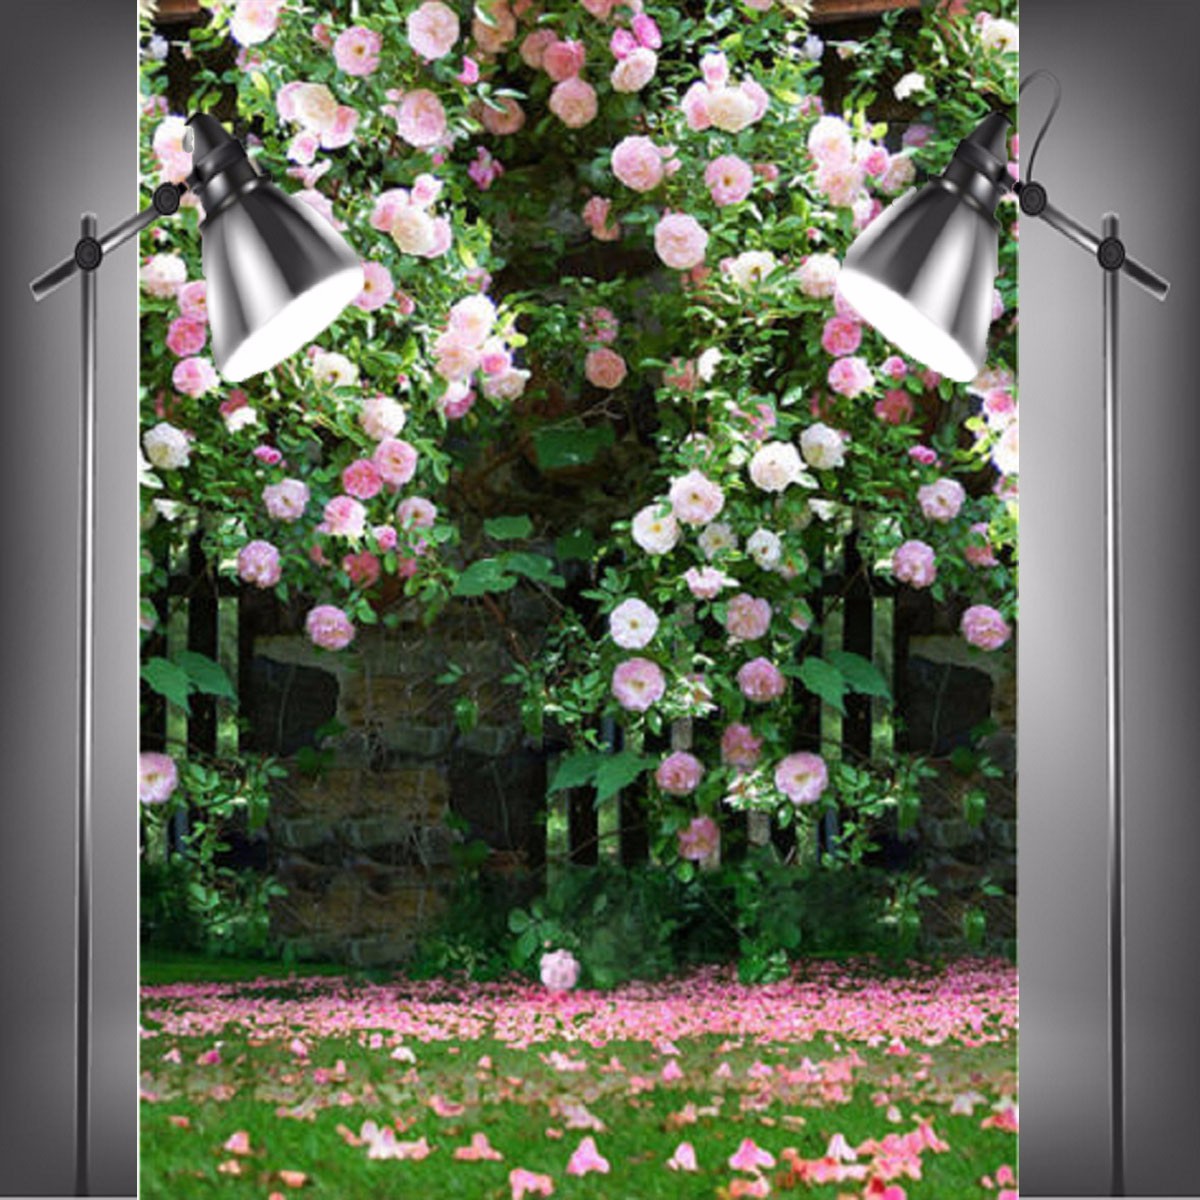 Photography-Vinyl-Background-Romantic-Wedding-Rendezvous-Garden-Roses-Cluster-1142376-1